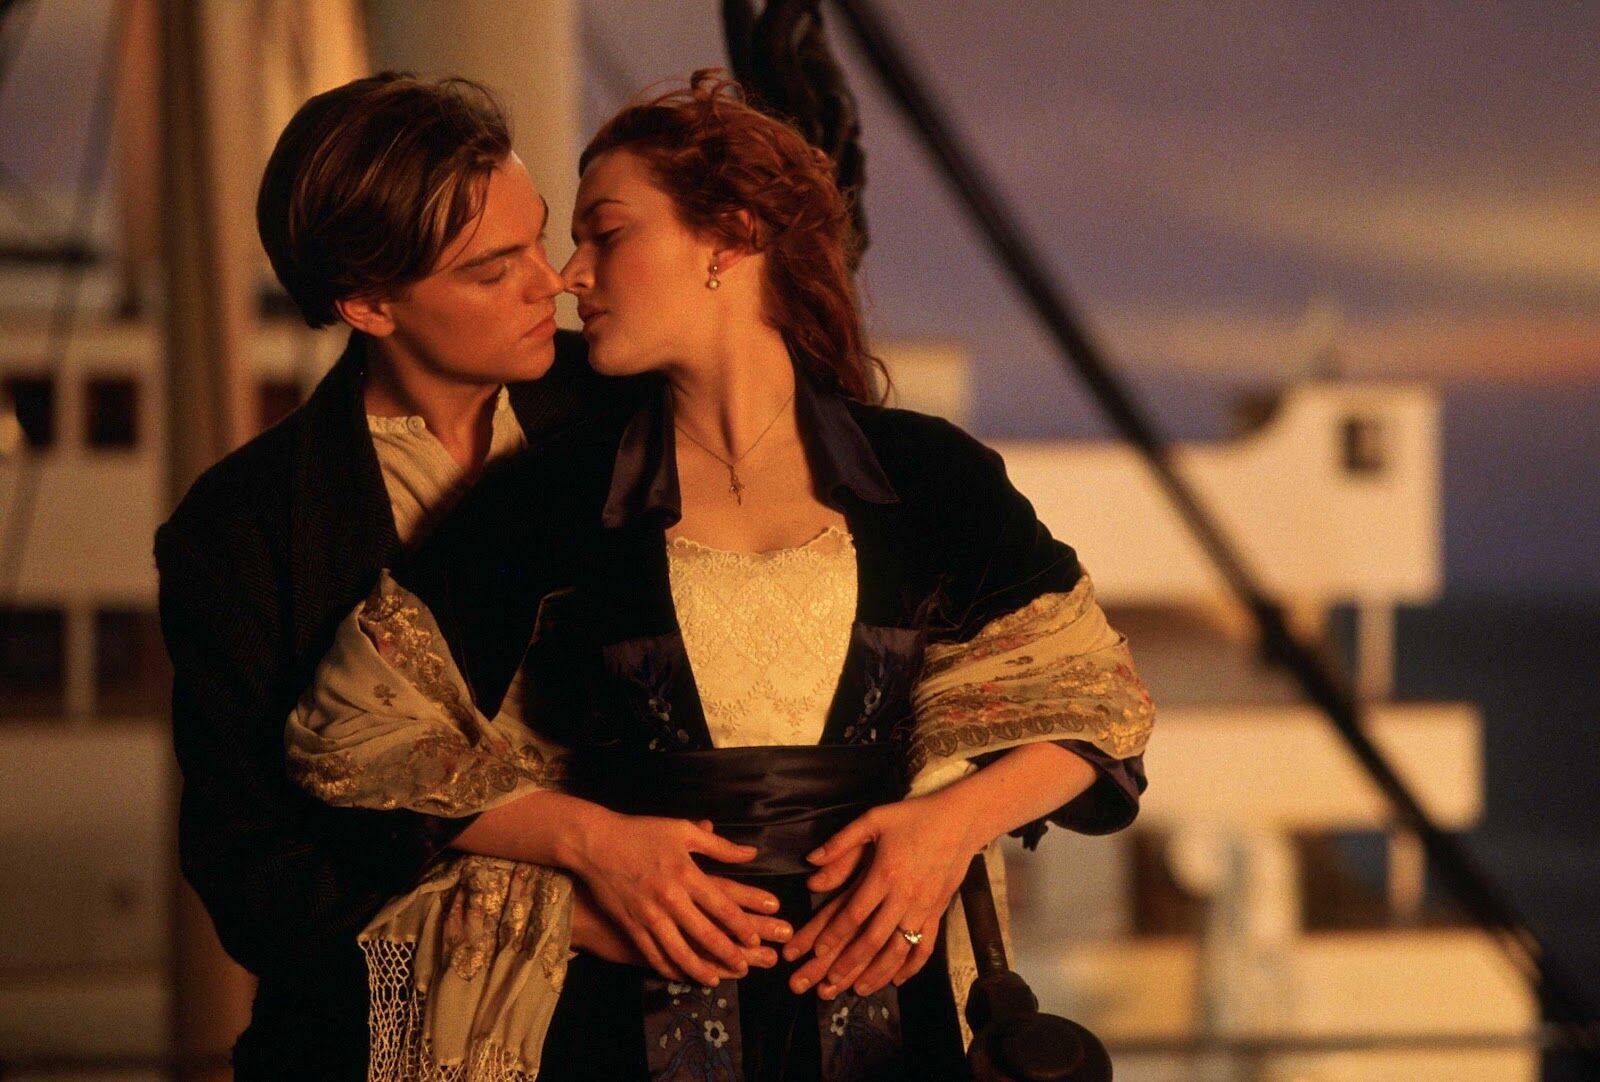 Was Leonardo DiCaprio already a star when Titanic came out in 1997?